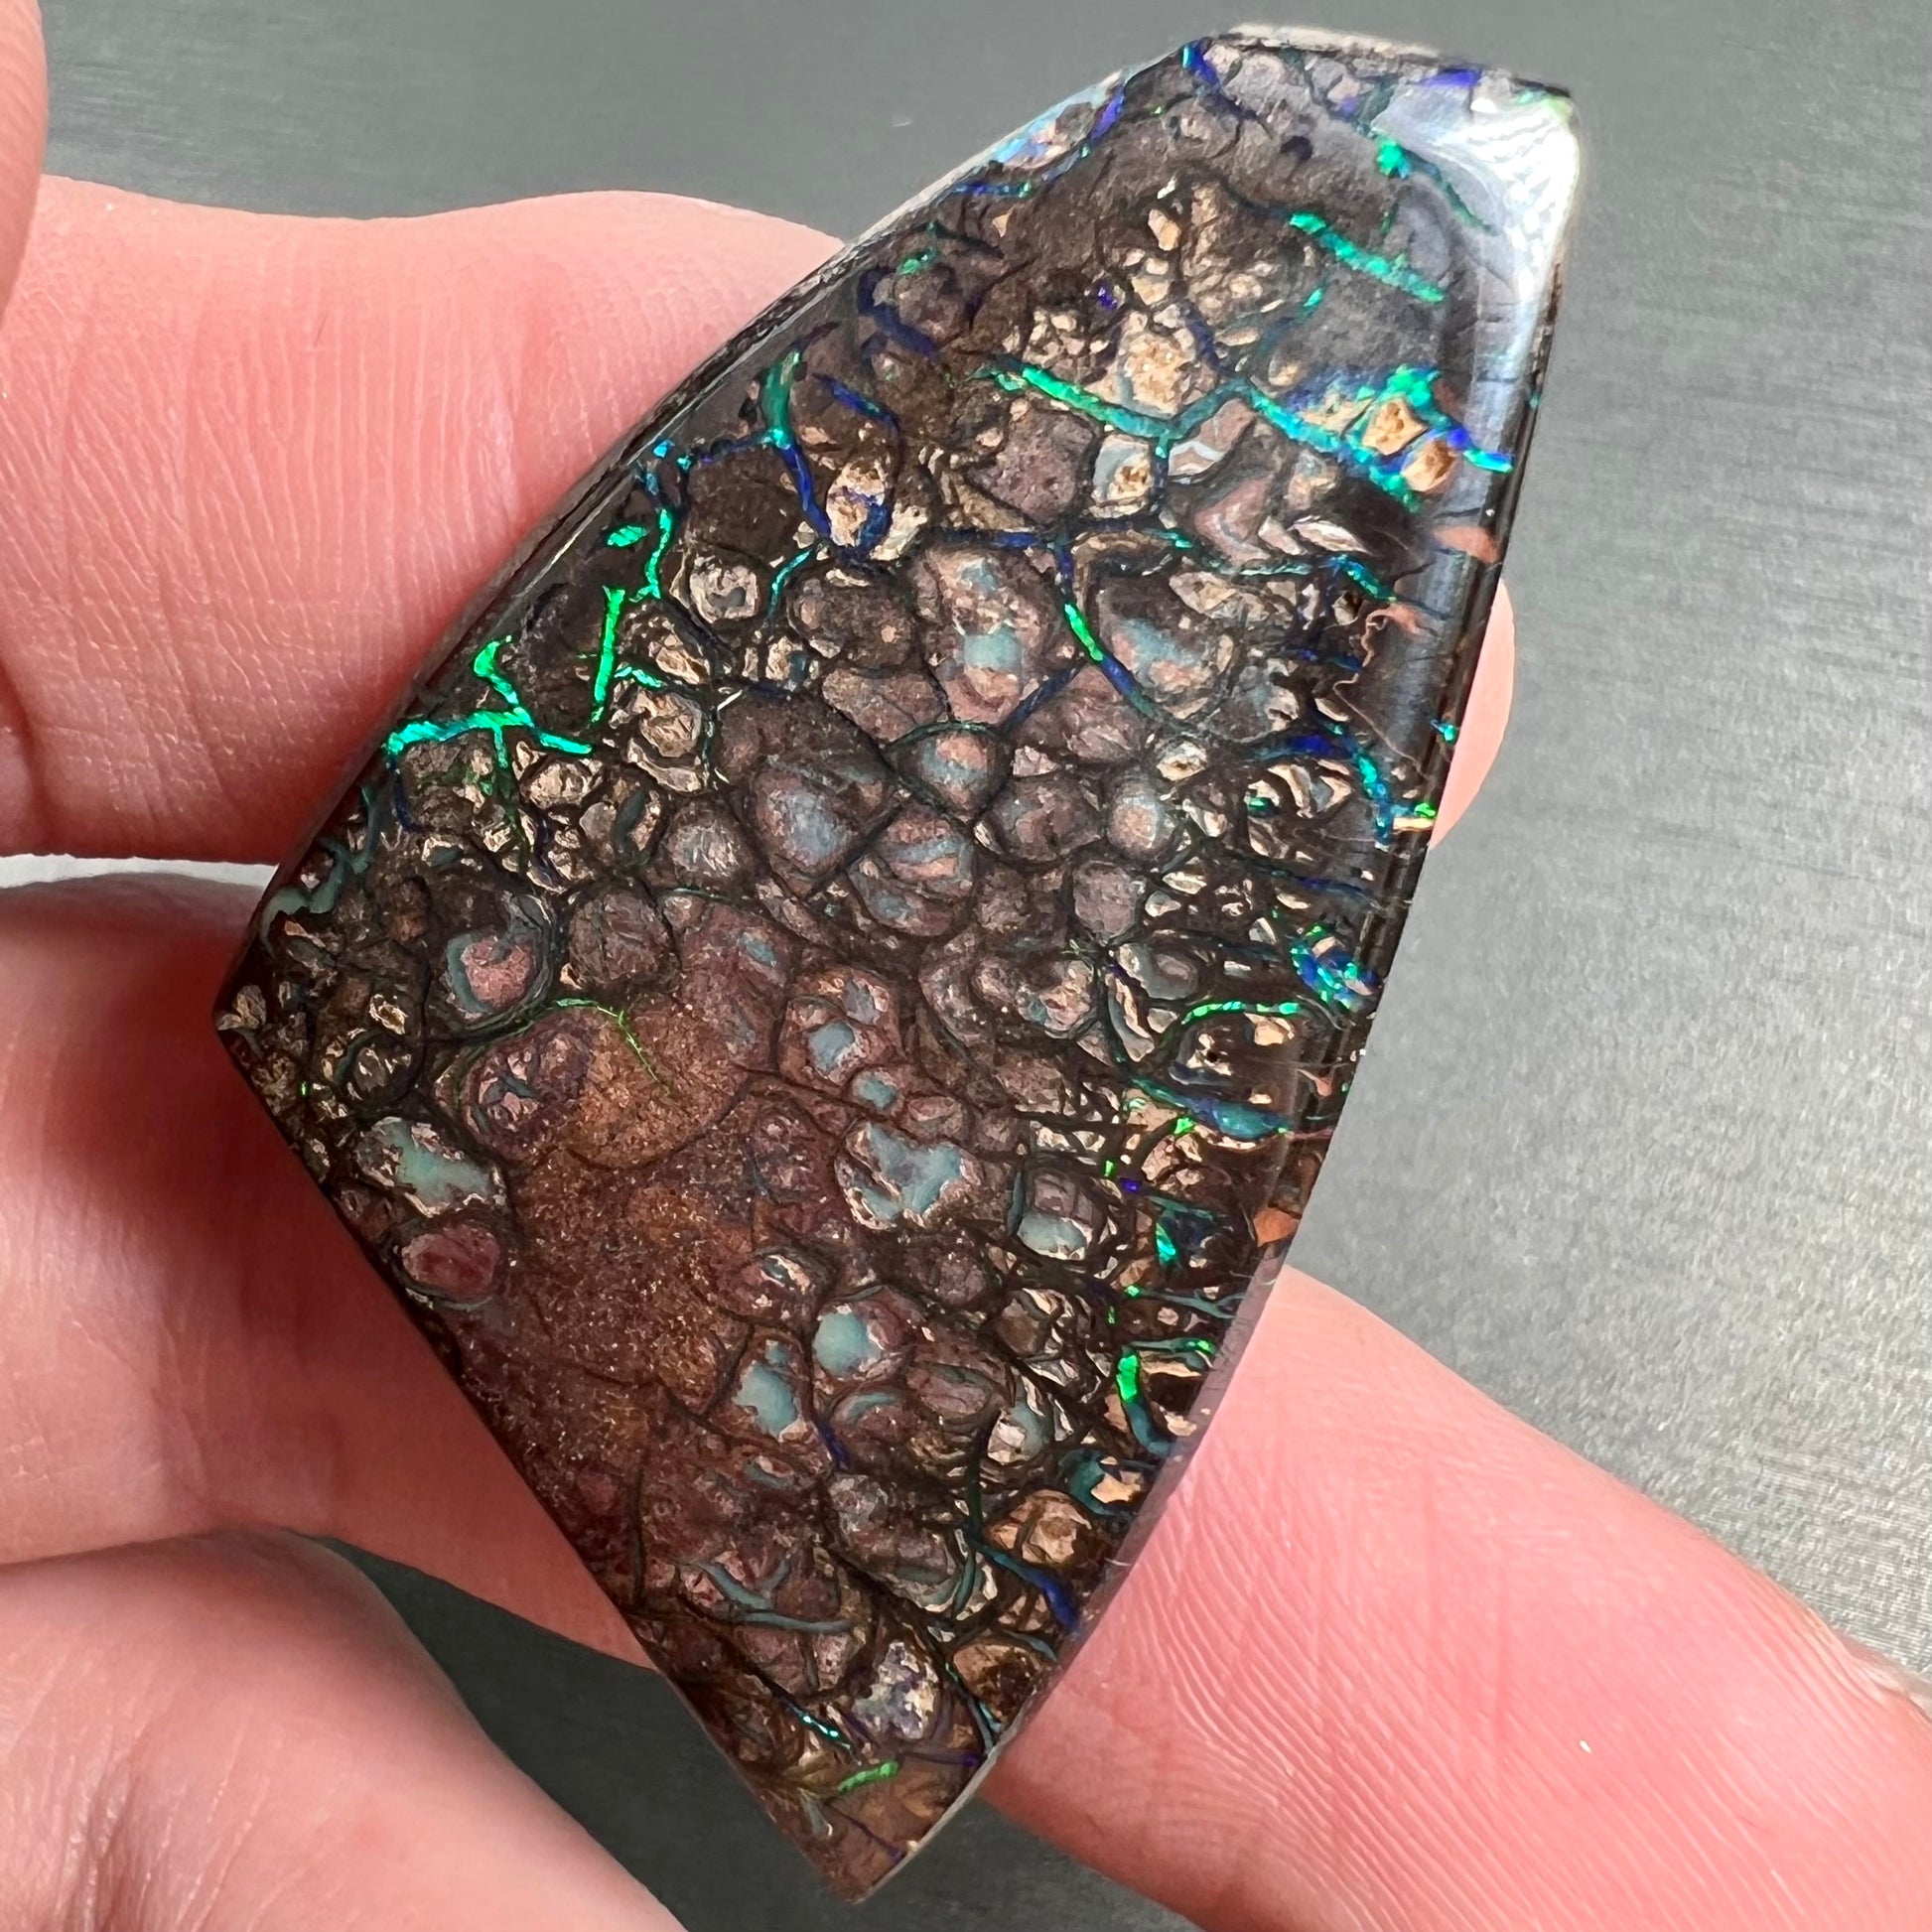 A loose, freeform cut polished Koroit boulder opal stone from Koroit Mining District, Australia.